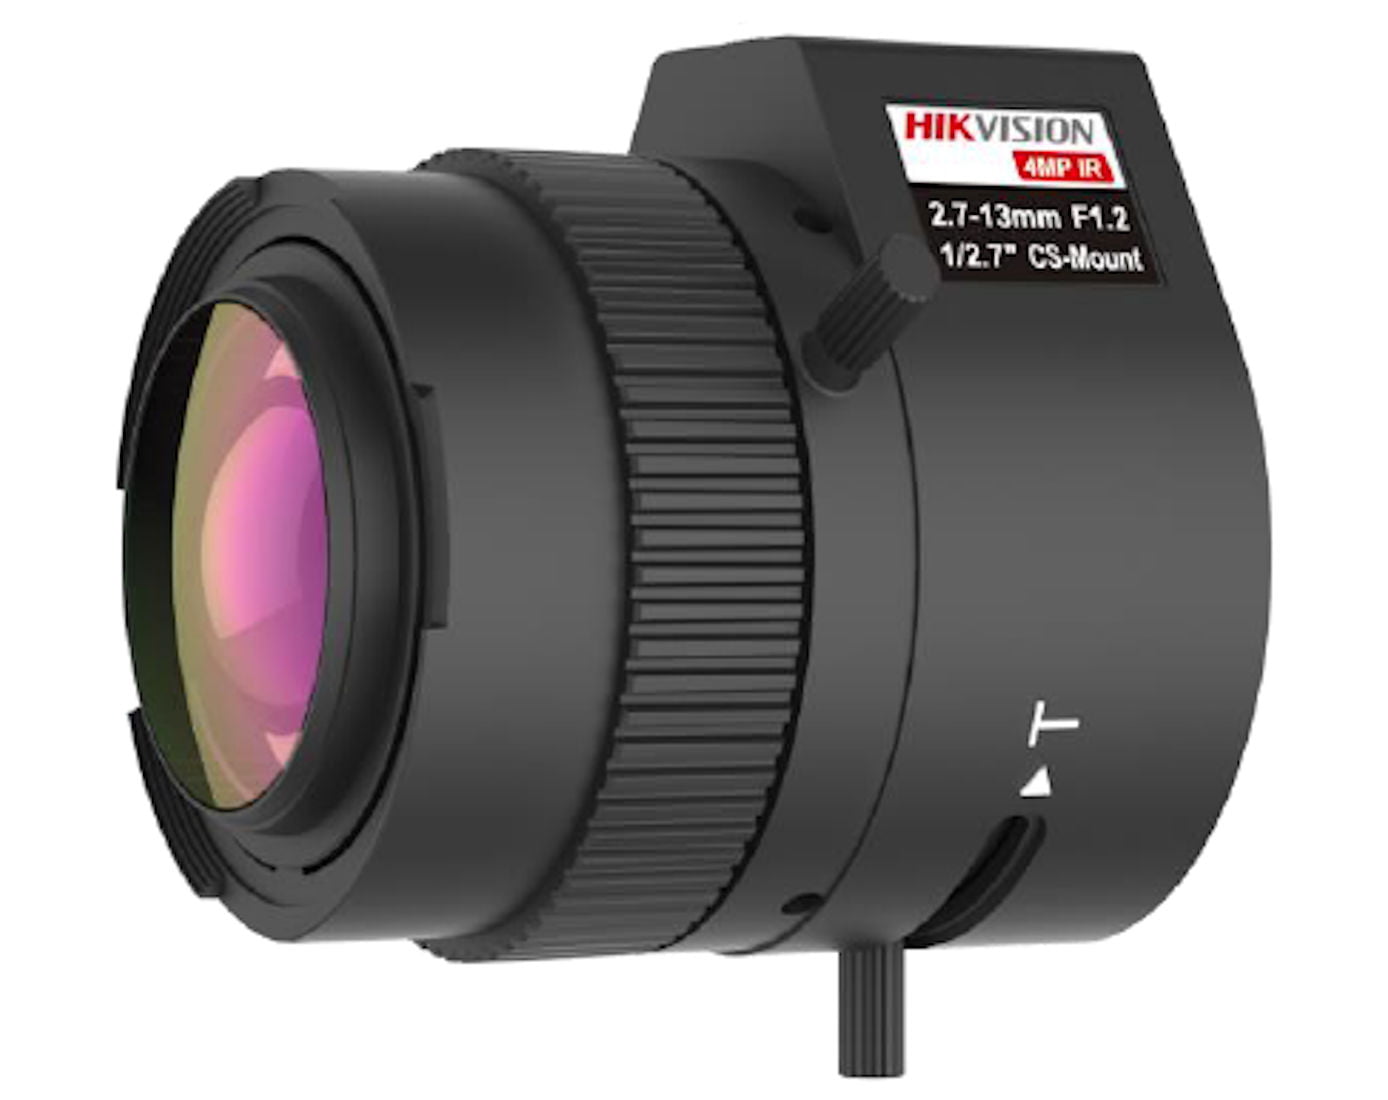 Hikvision TV2713D-4MPIR Megapixel Auto Iris Security Camera Lens